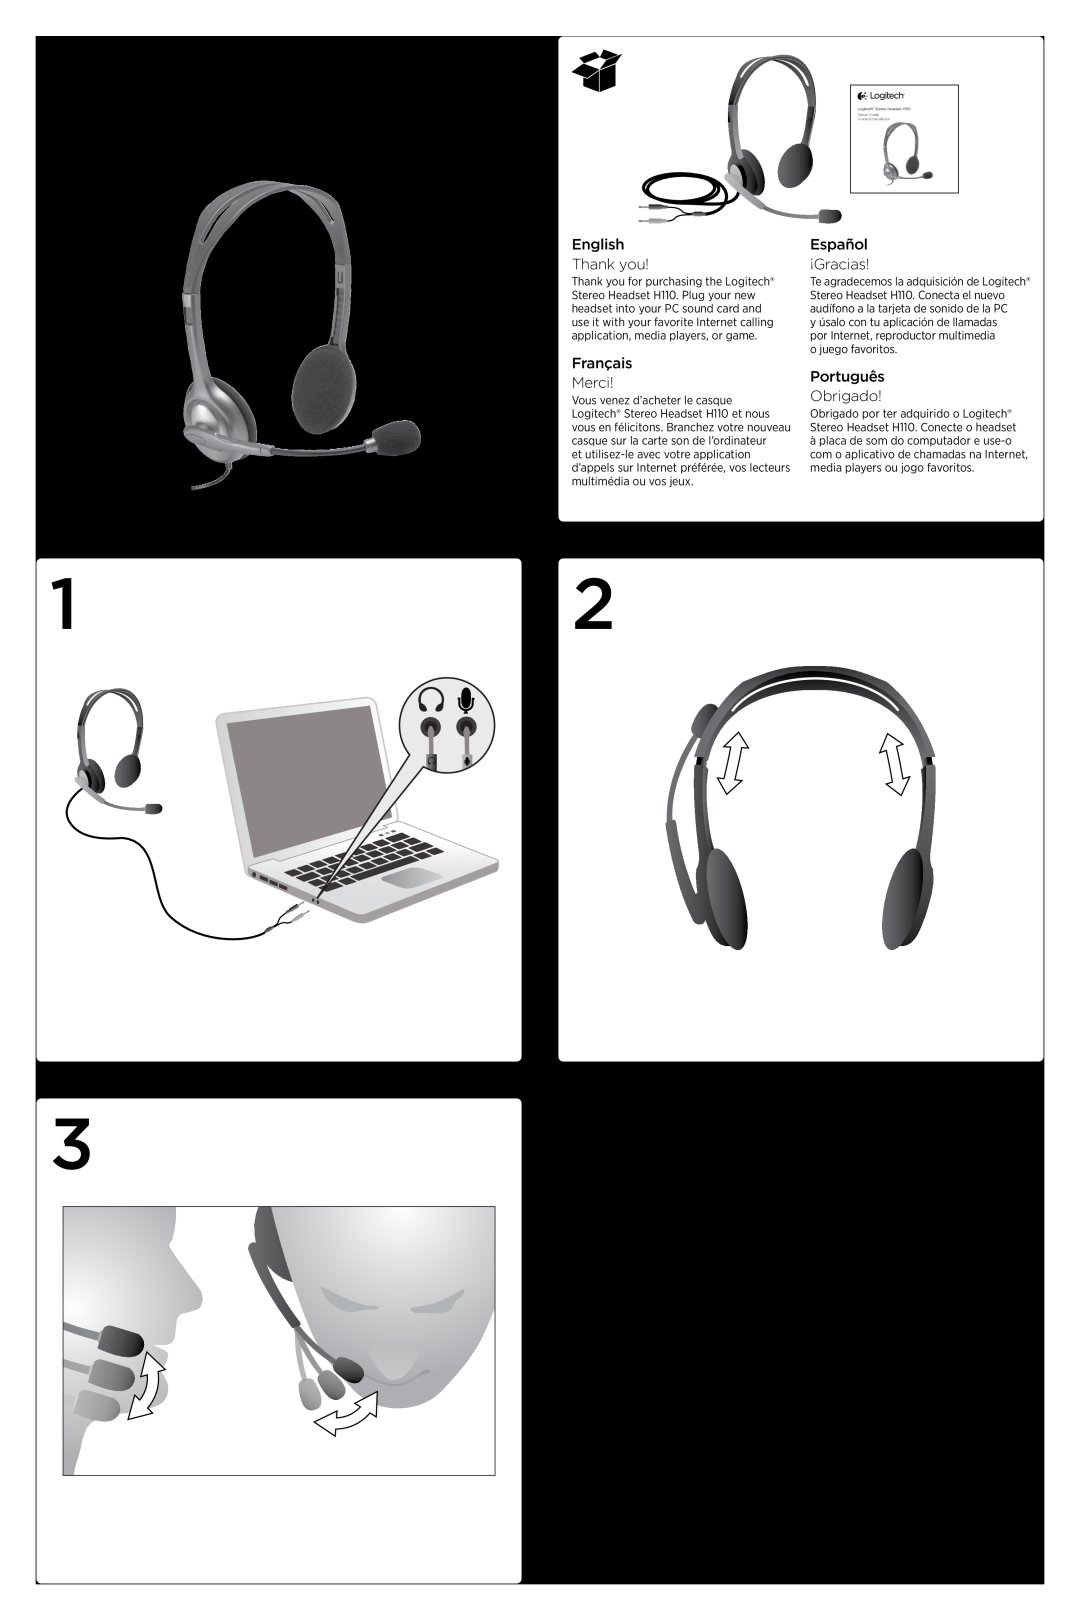 Logitech setup guide Logitech Stereo Headset H110 Setup Guide Guide d’installation, English Thank you, Français Merci 